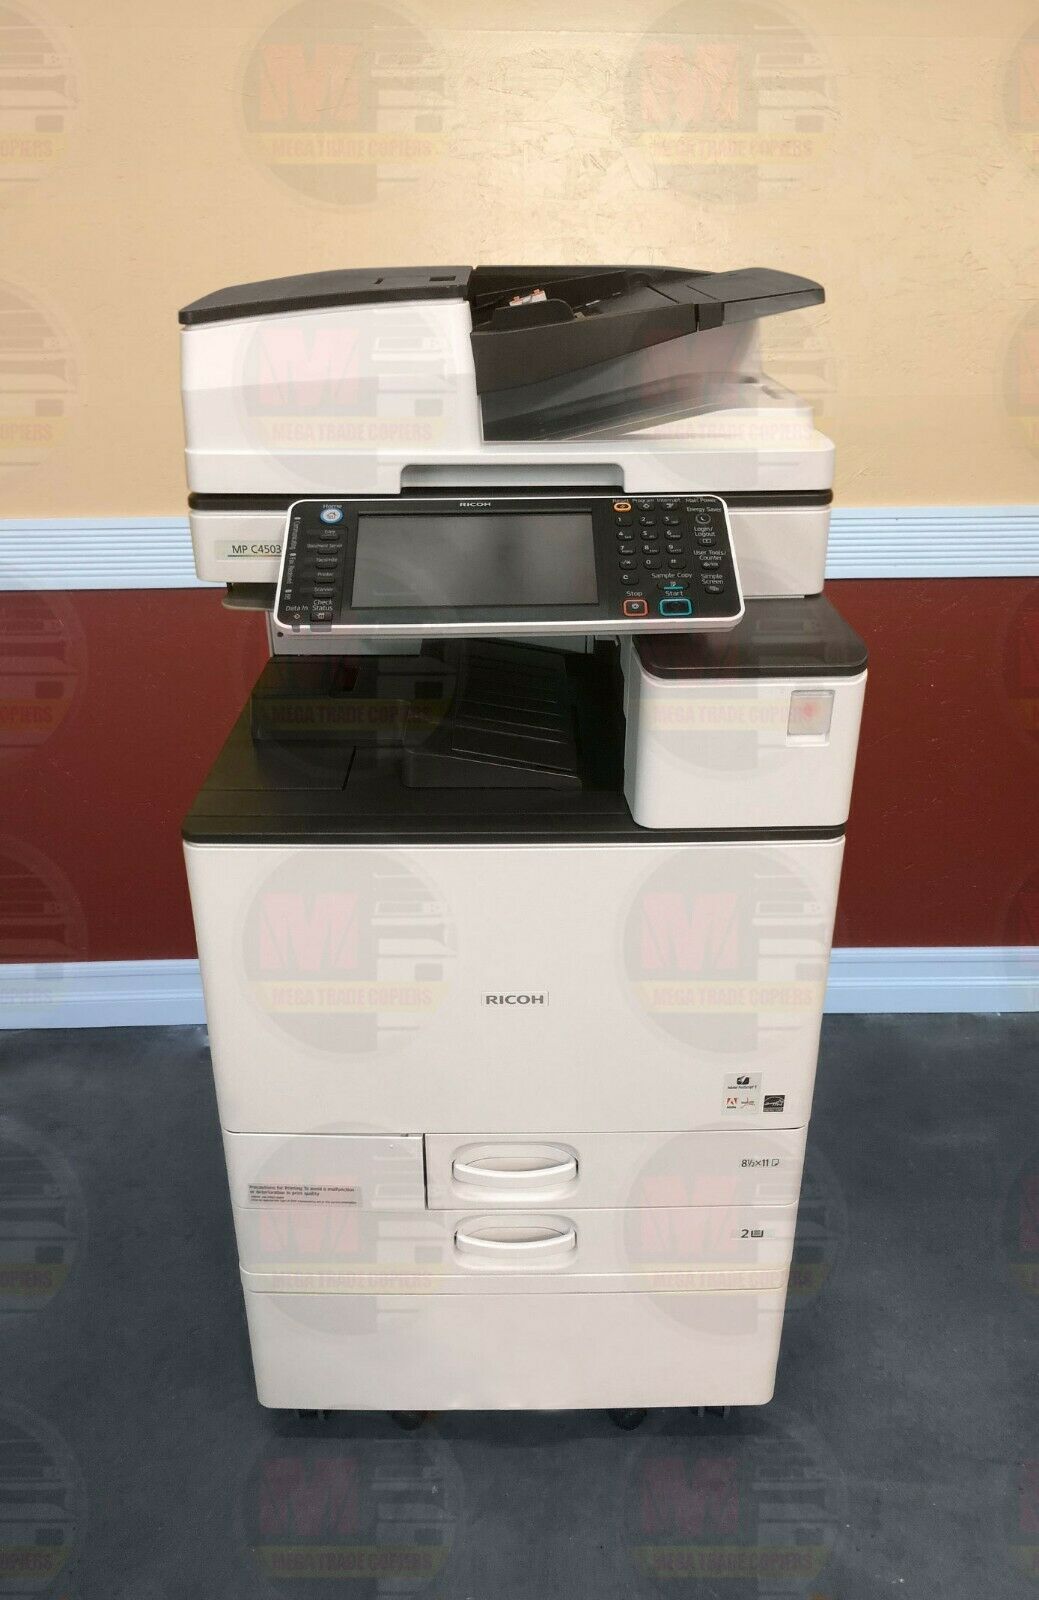 Ricoh Aficio Mp C4503 Color A3 Laser Multifunction Printer Copier Scanner 45 Ppm